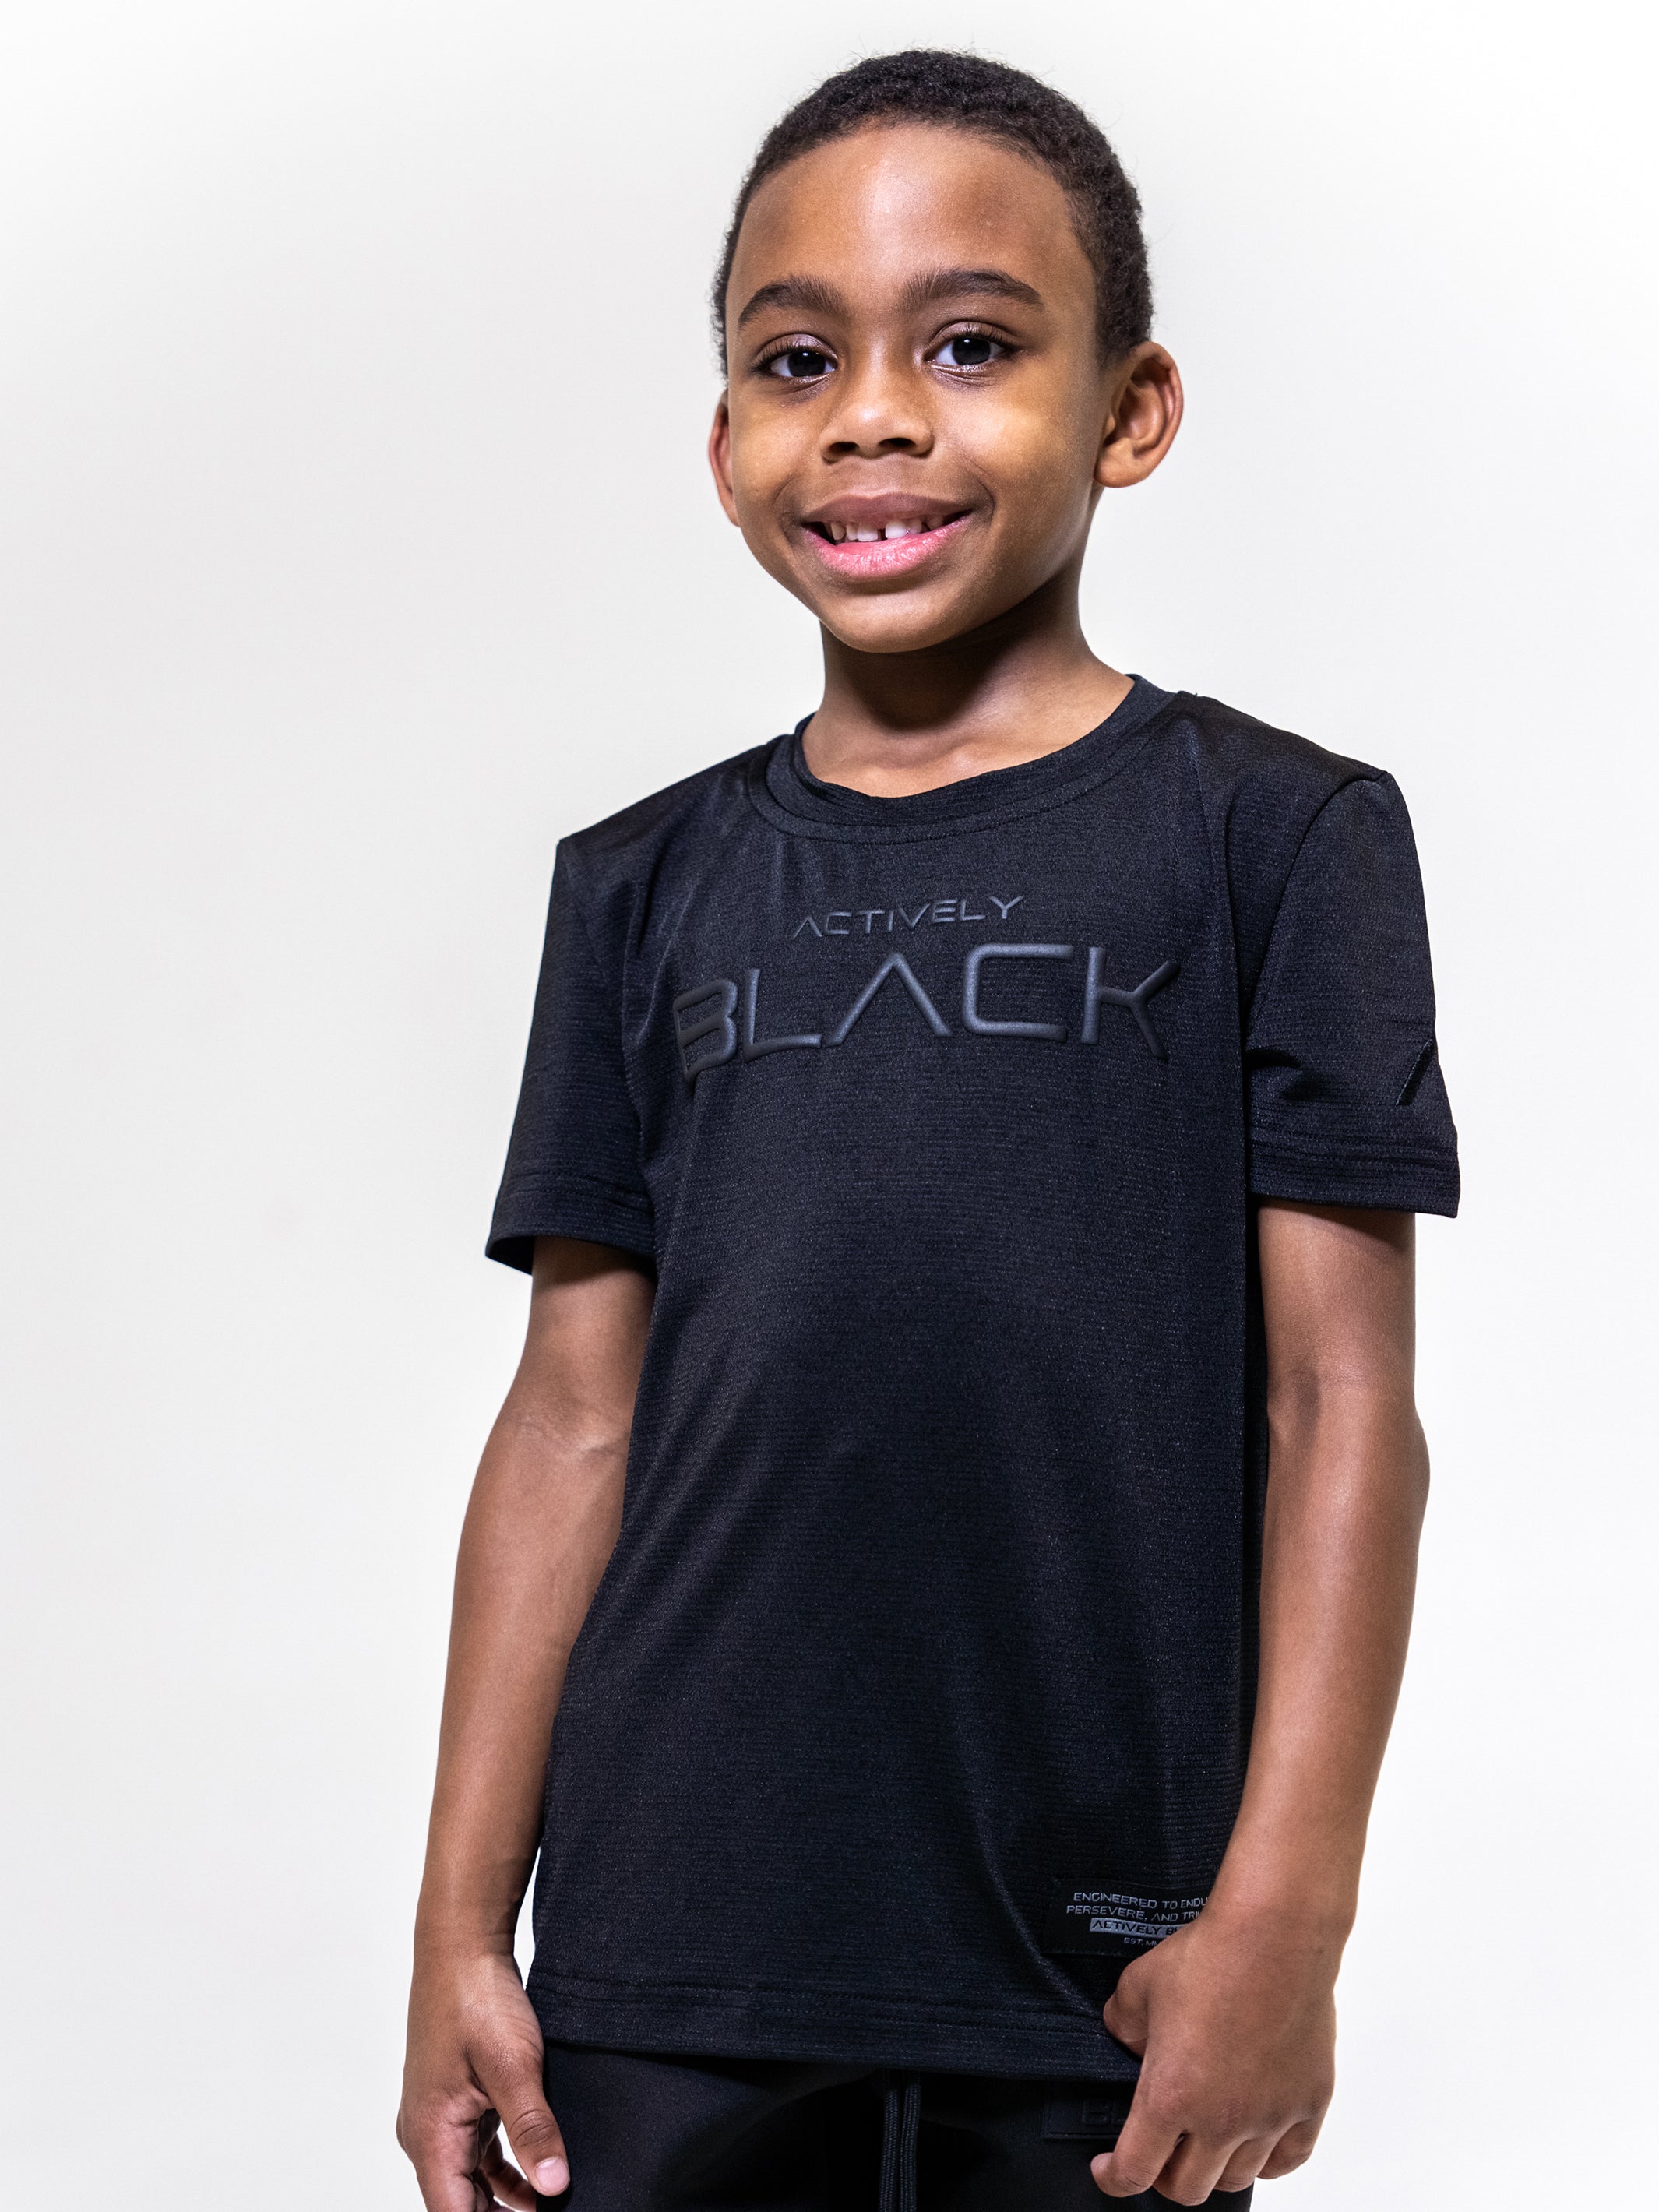 Kids Actively Black Stealth Performance Shirt